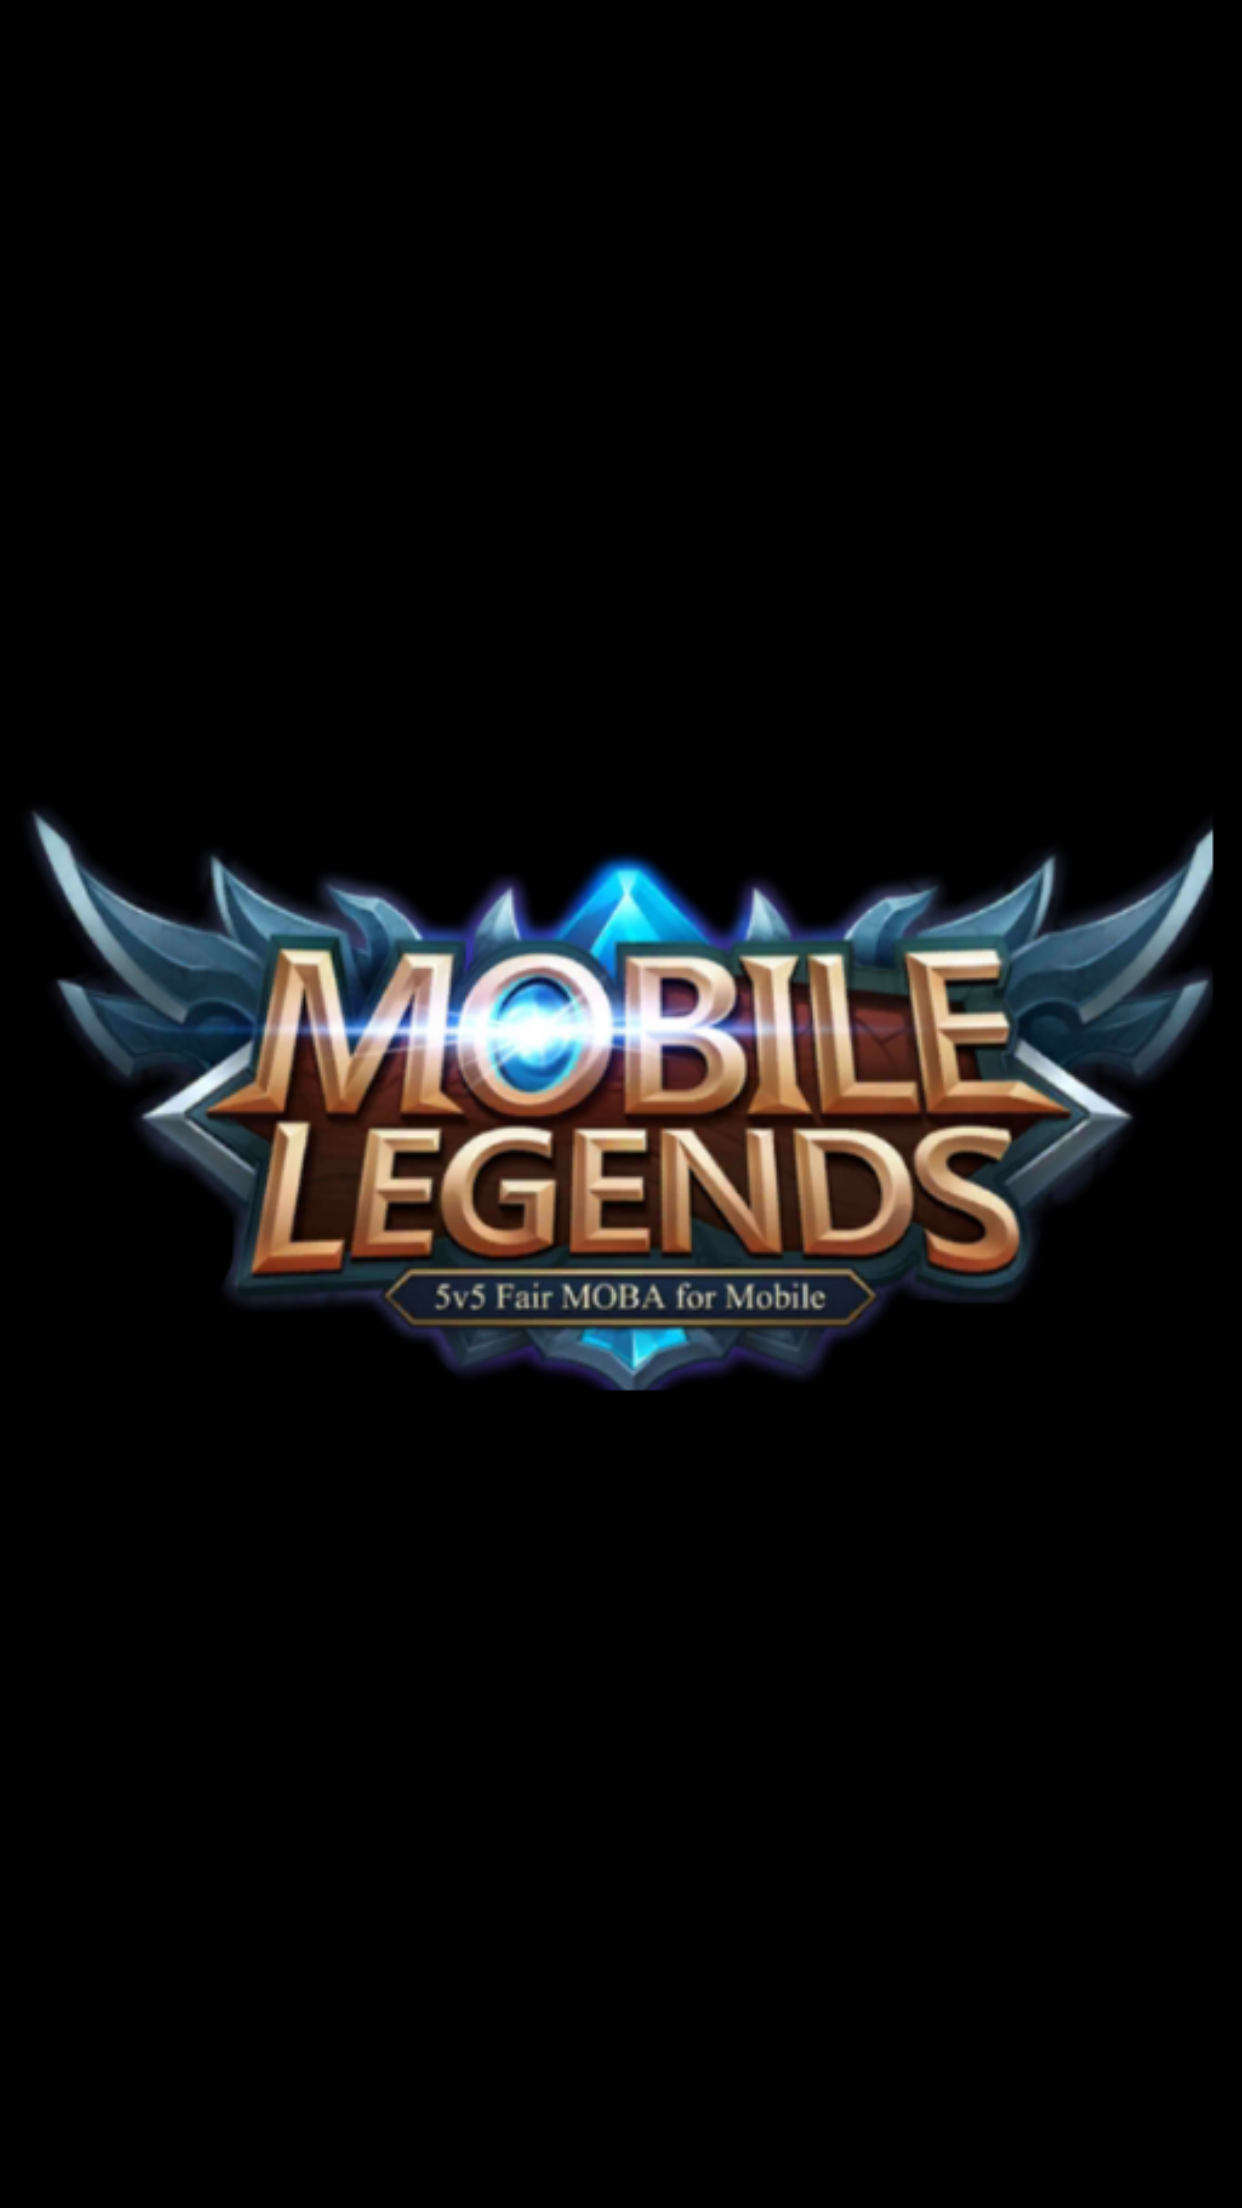 Mobile Legends Logo Full HD Wallpapers - Wallpaper Cave